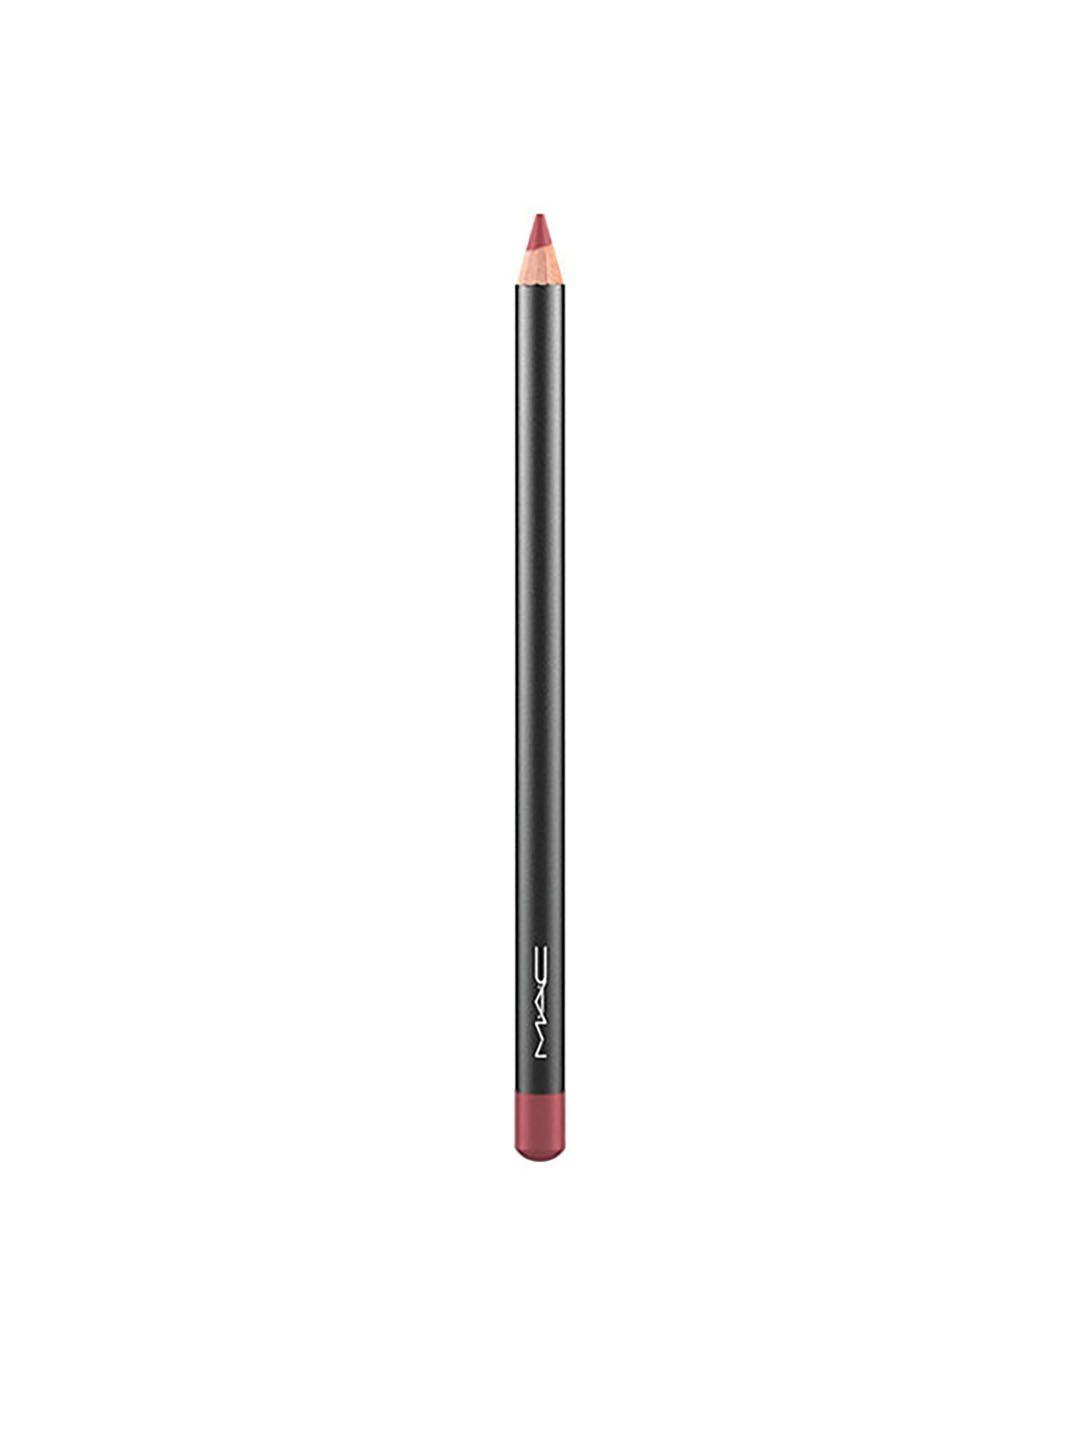 m.a.c lip pencil - chicory 1.45g